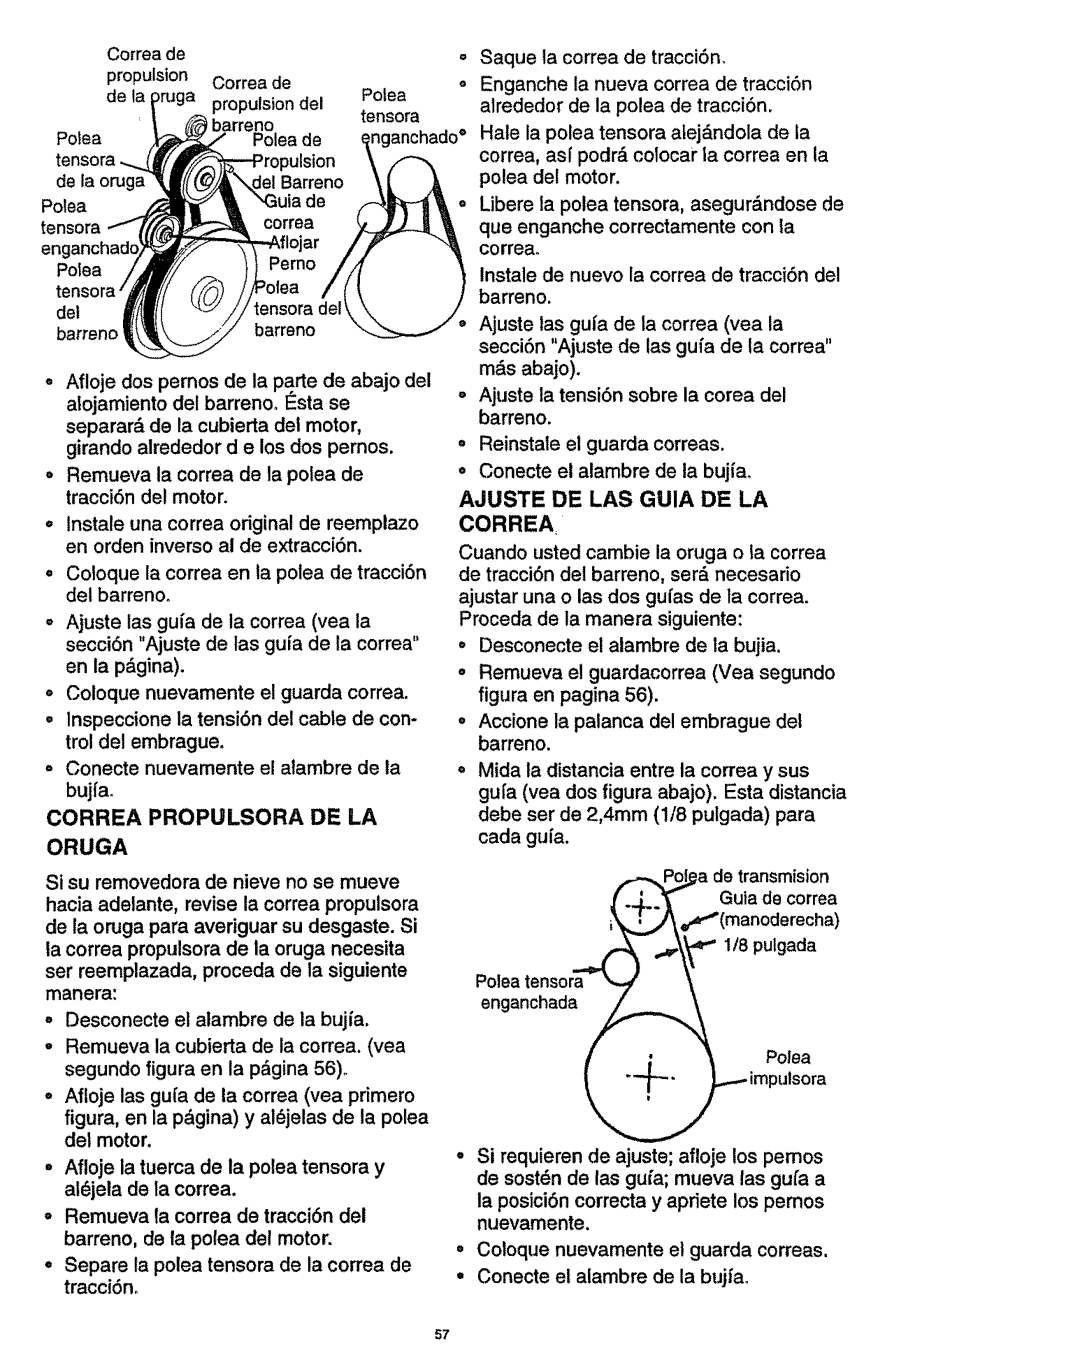 Craftsman 536.886141 manual Oruga, Ajuste DE LAS Guia DE LA Correa, Poade transmision Guta de correa, Polea tensora 